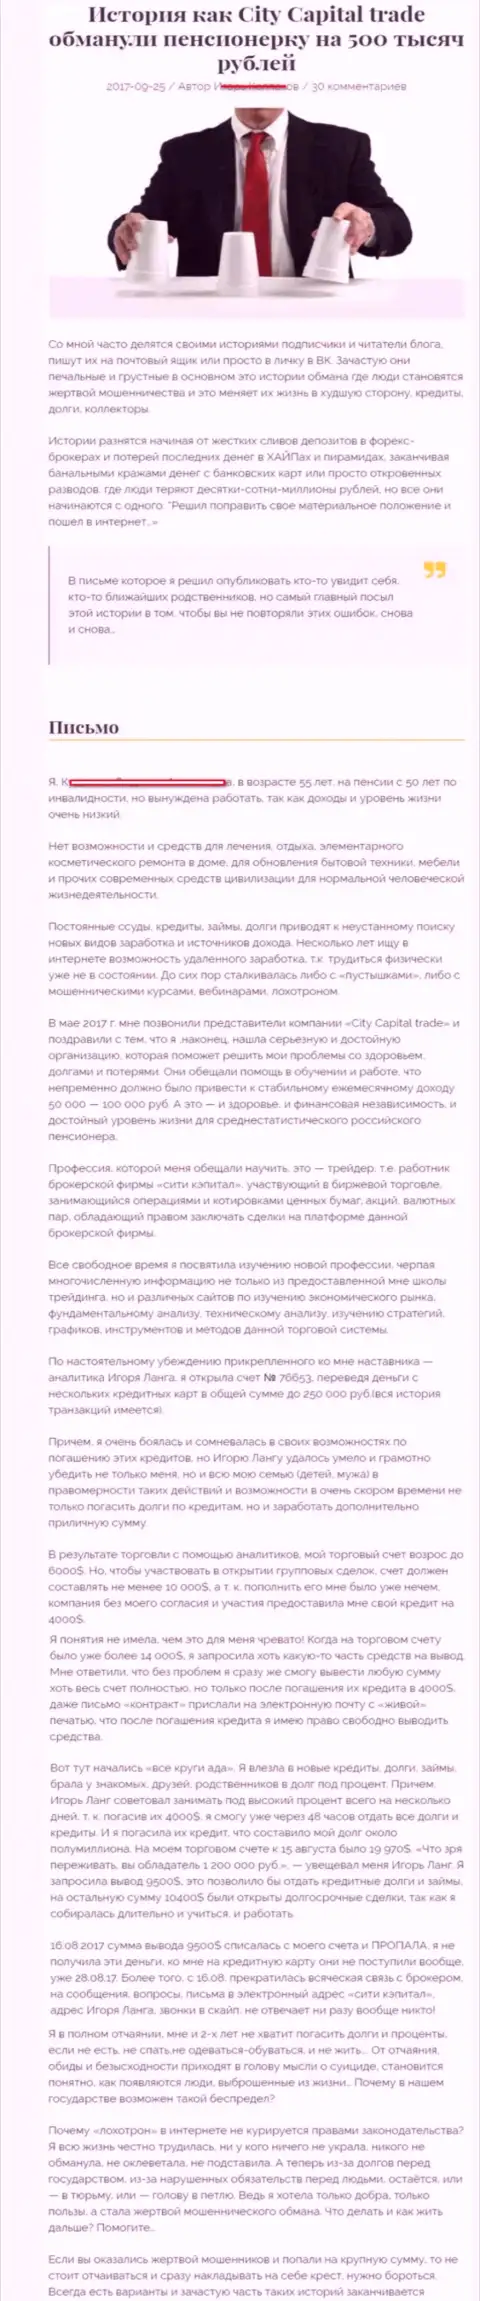 CityCapitalTrade кинули клиентку пенсионного возраста - инвалида на 500 000 российских рублей - ЛОХОТРОНЩИКИ !!!